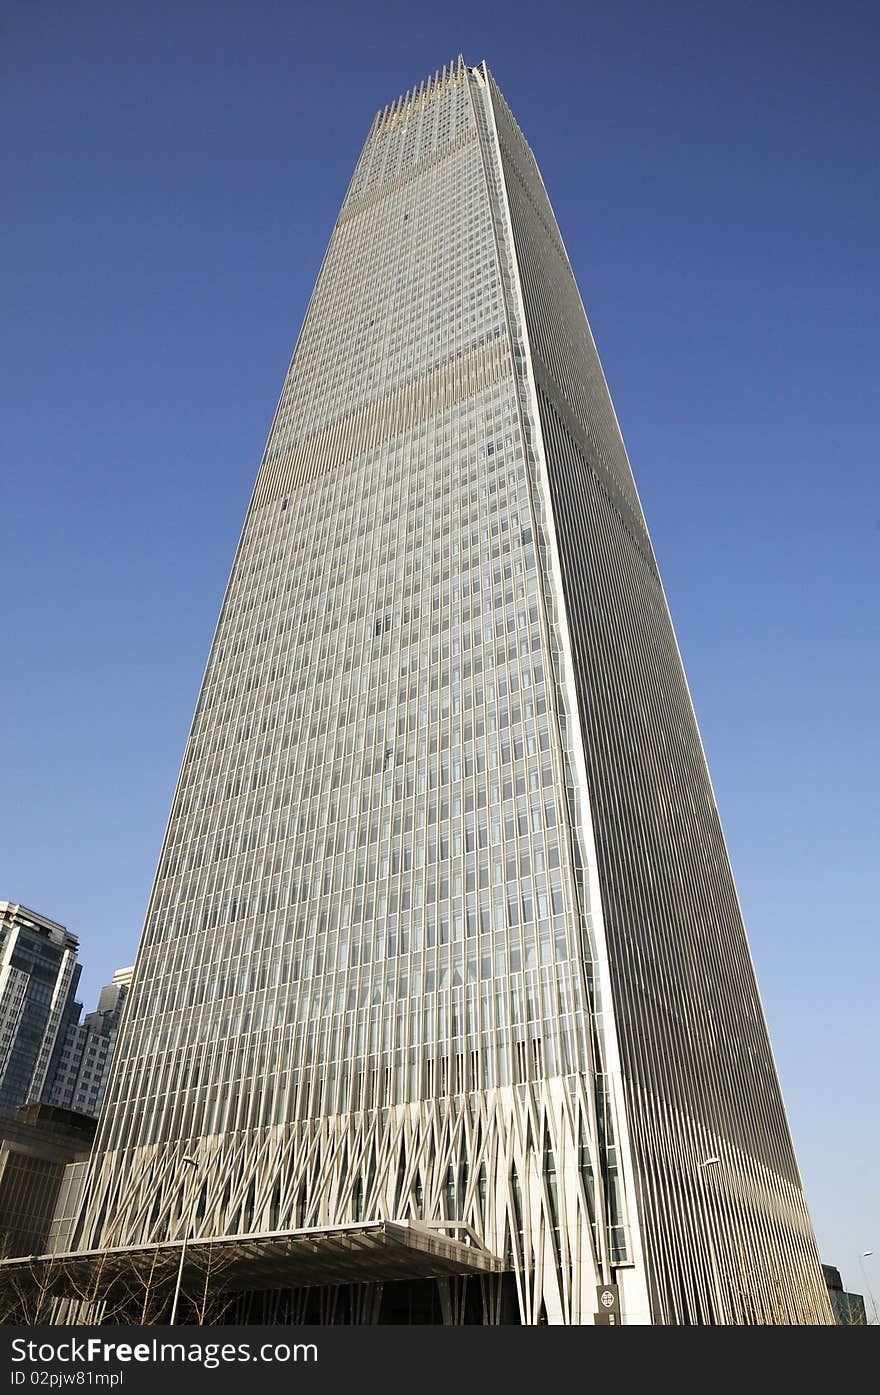 Skyscraper of beijing world trade center tower